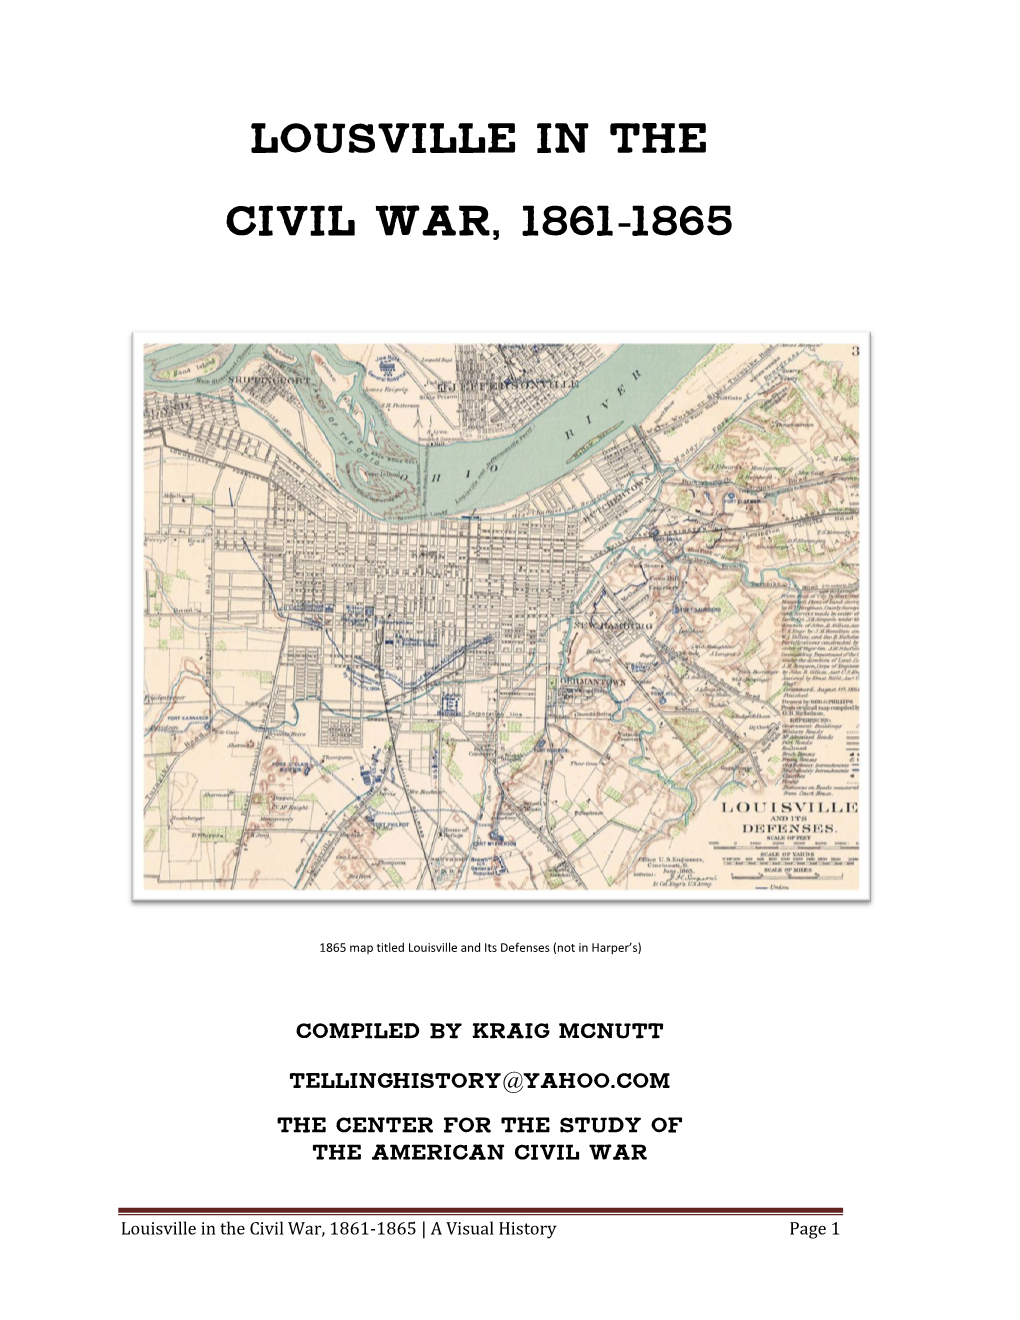 Lousville in the Civil War, 1861-1865 the Weeklies